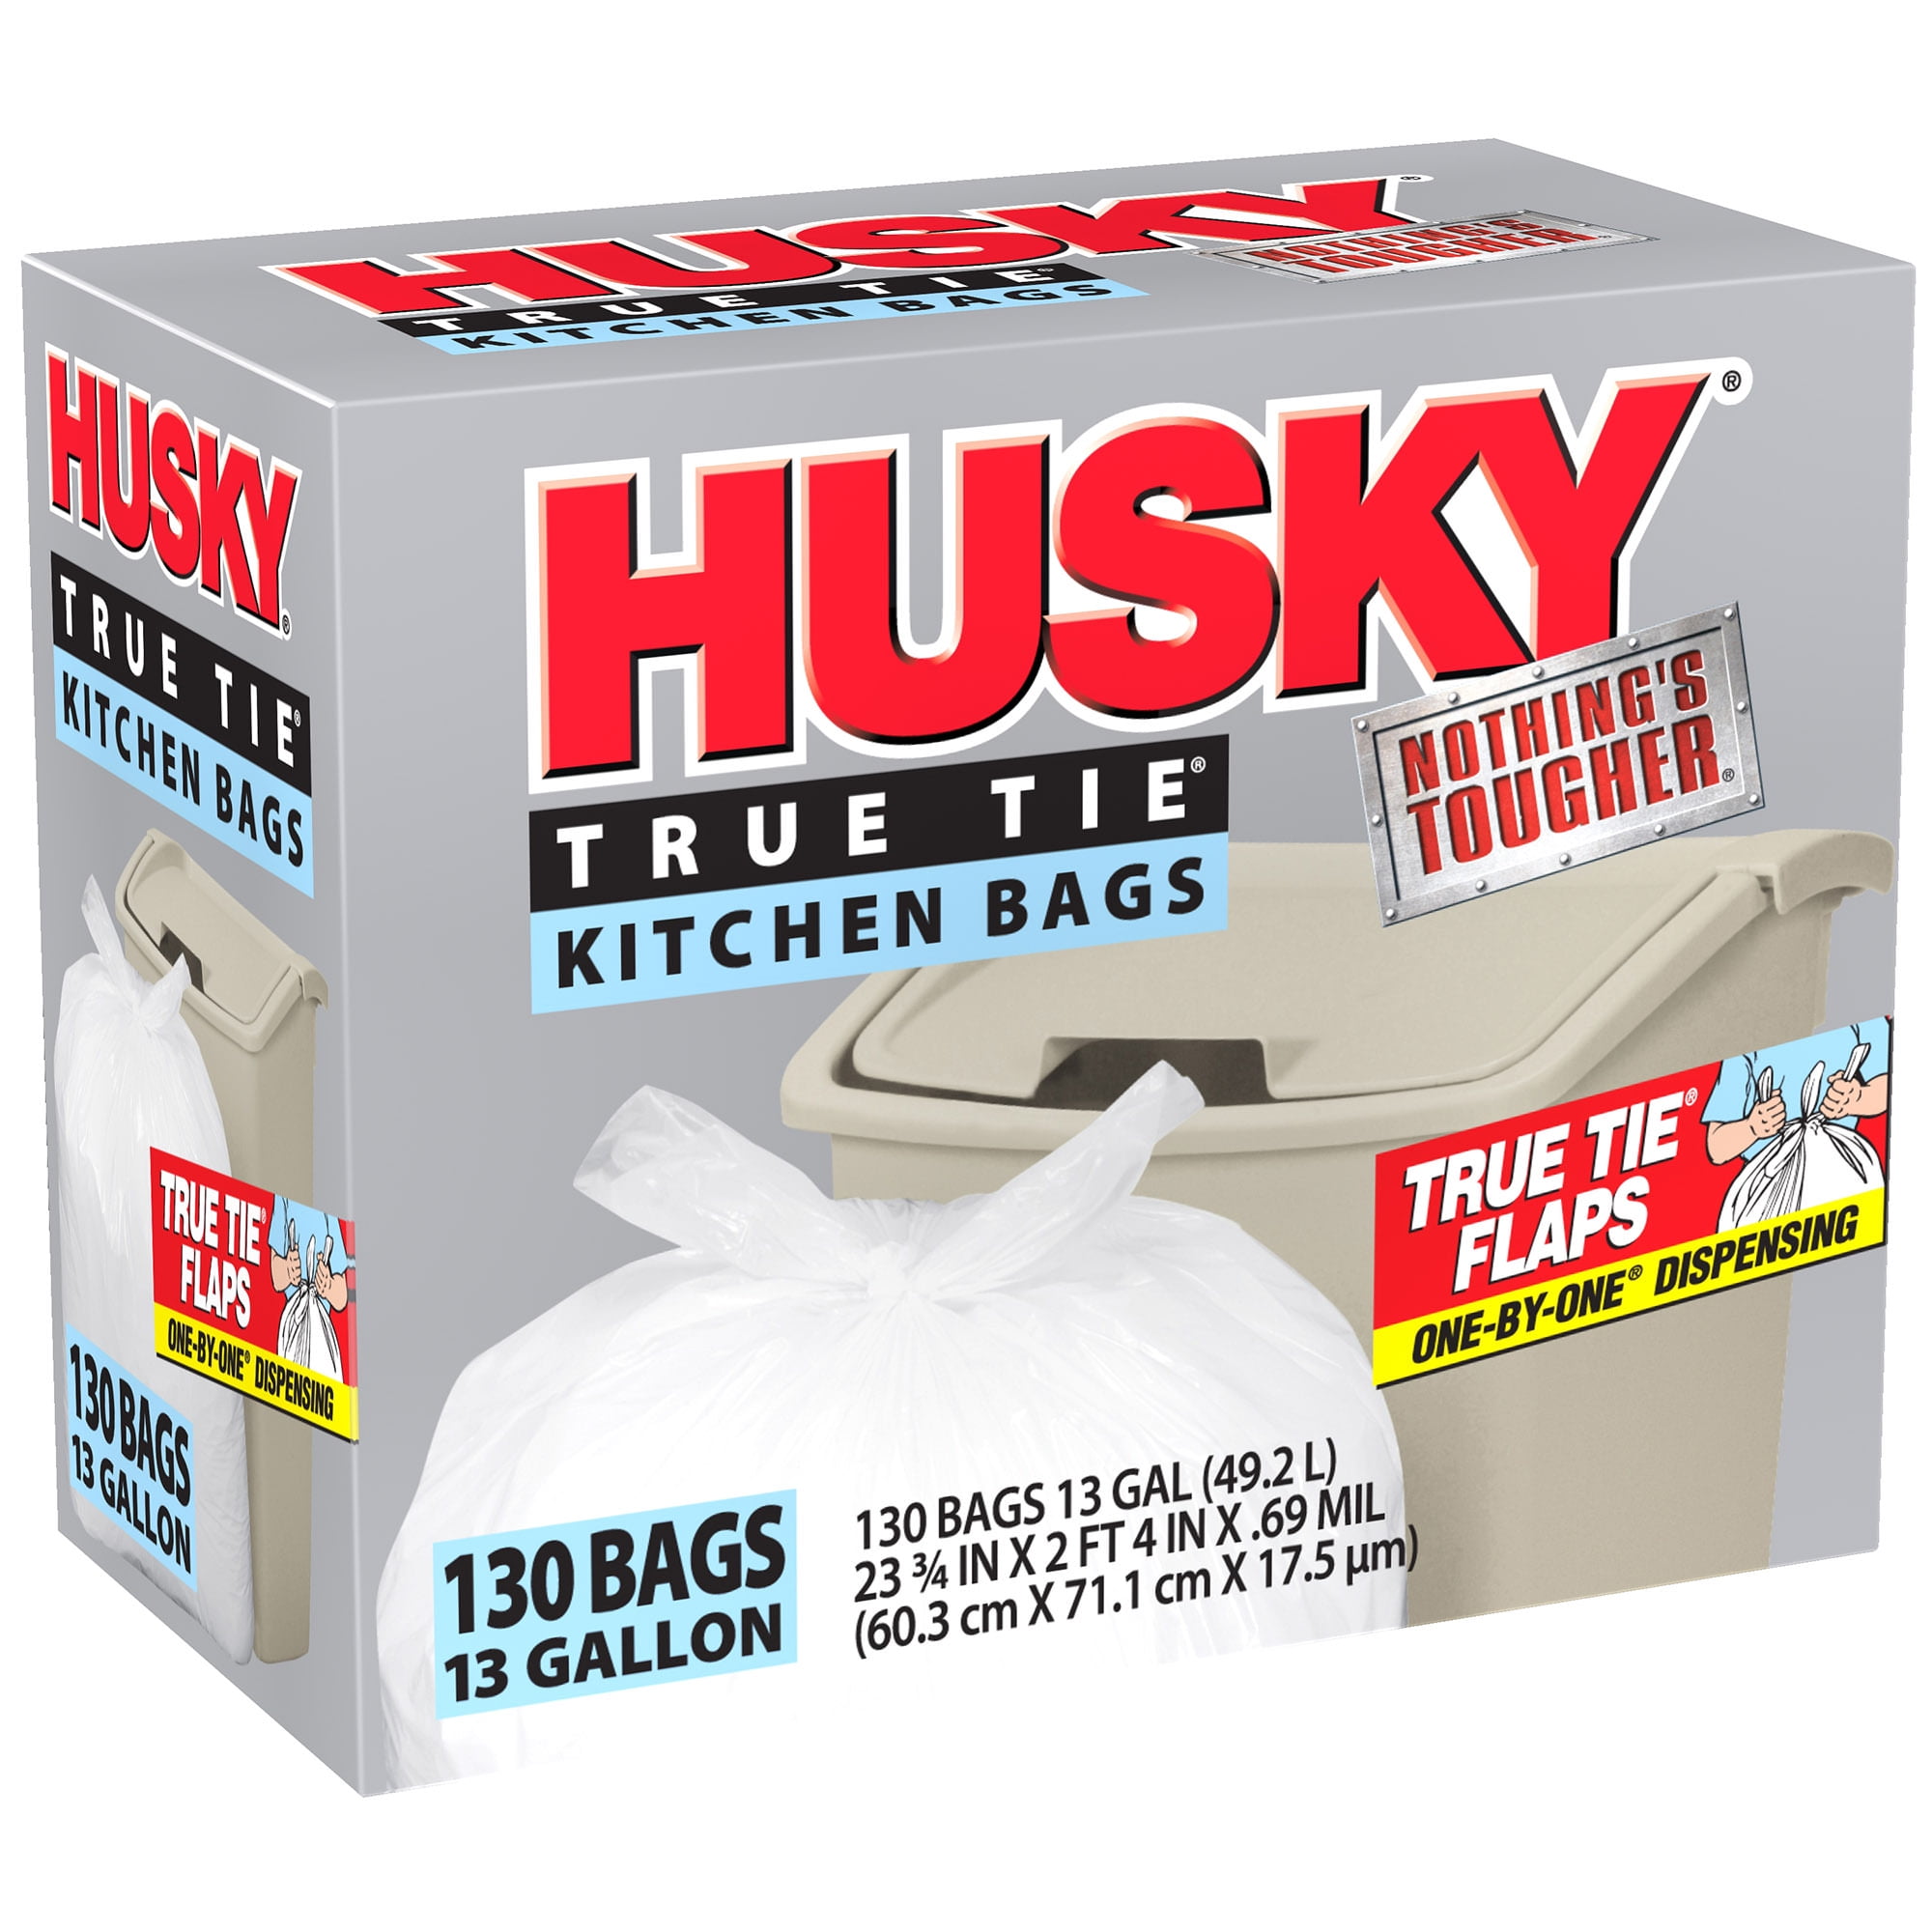 Husky Drawstring Kitchen 13 Gallon Trash Bags - Shop Trash Bags at H-E-B